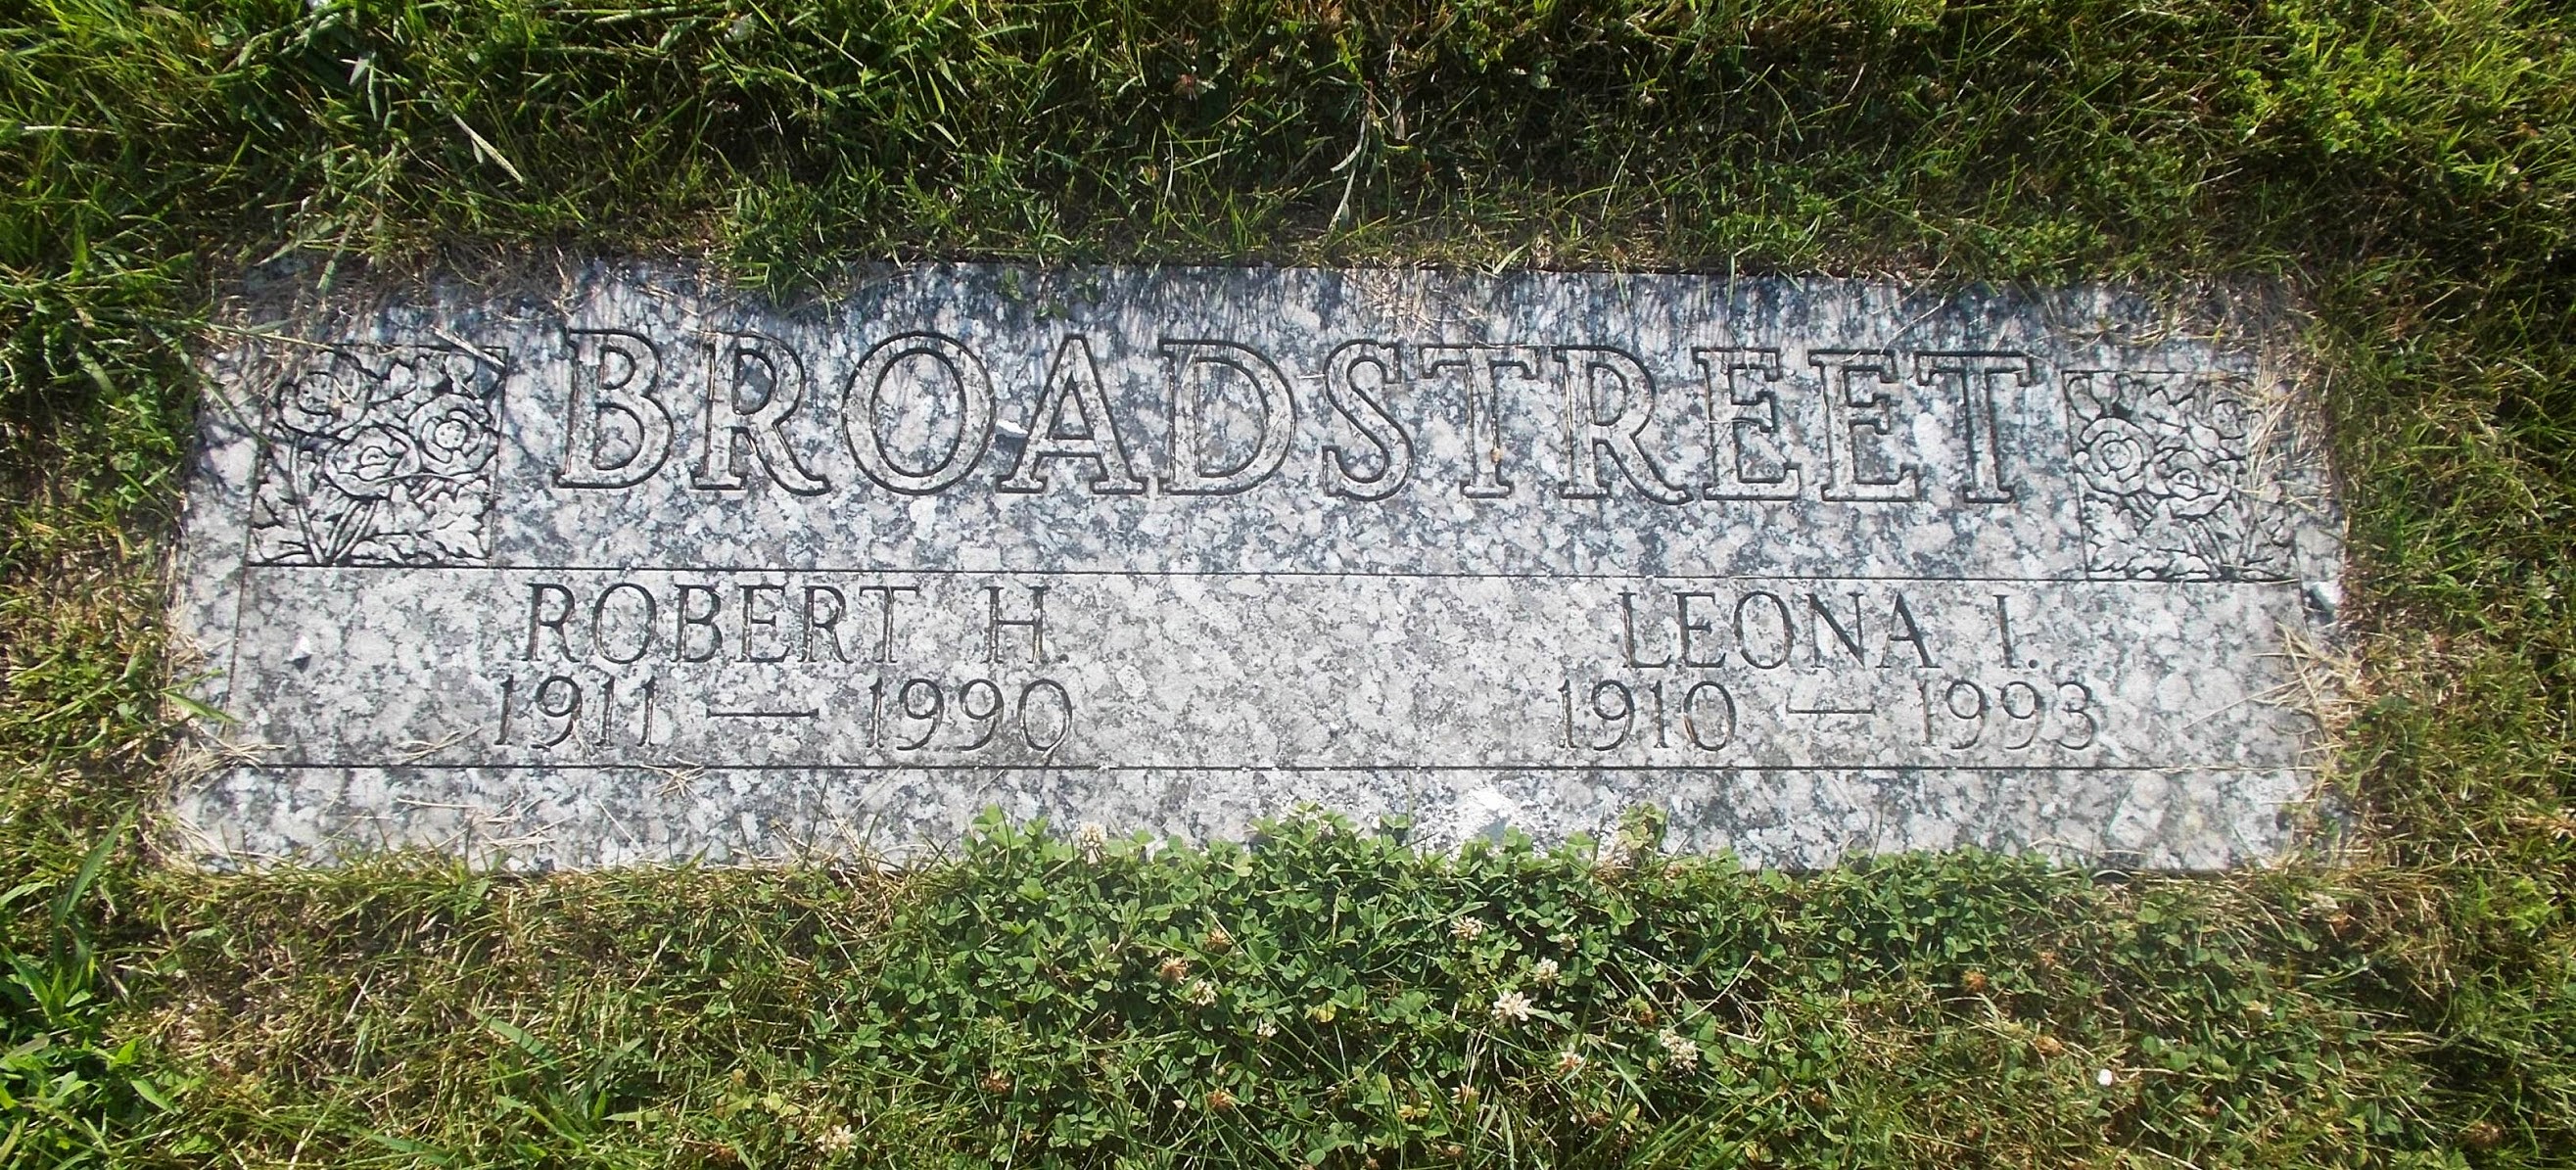 Robert H Broadstreet